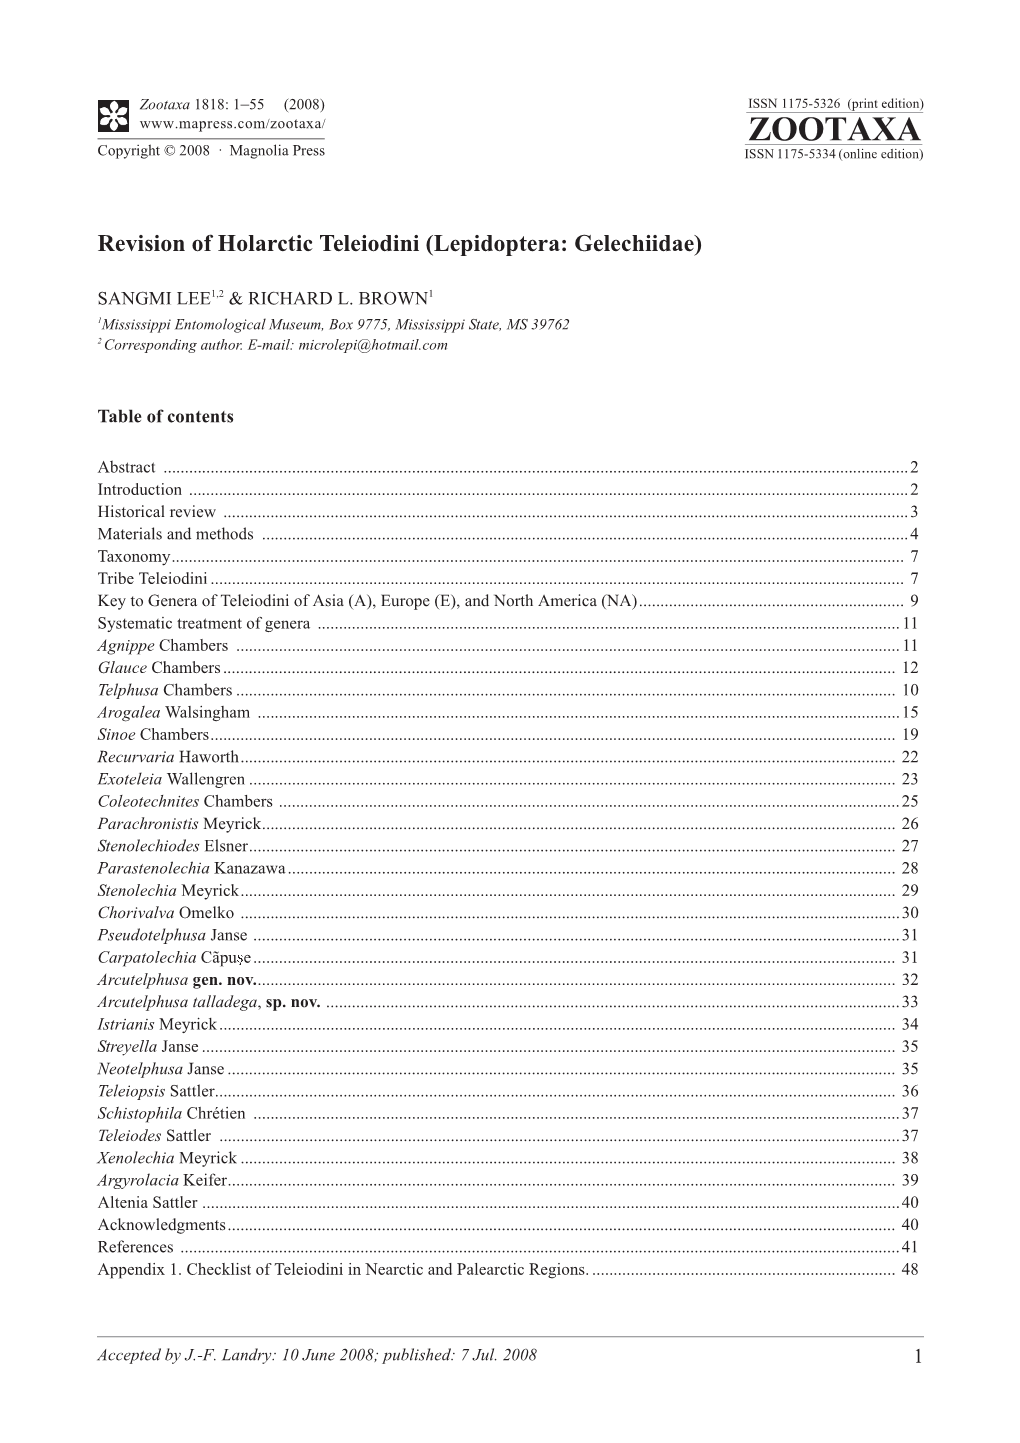 Zootaxa, Revision of Holarctic Teleiodini (Lepidoptera